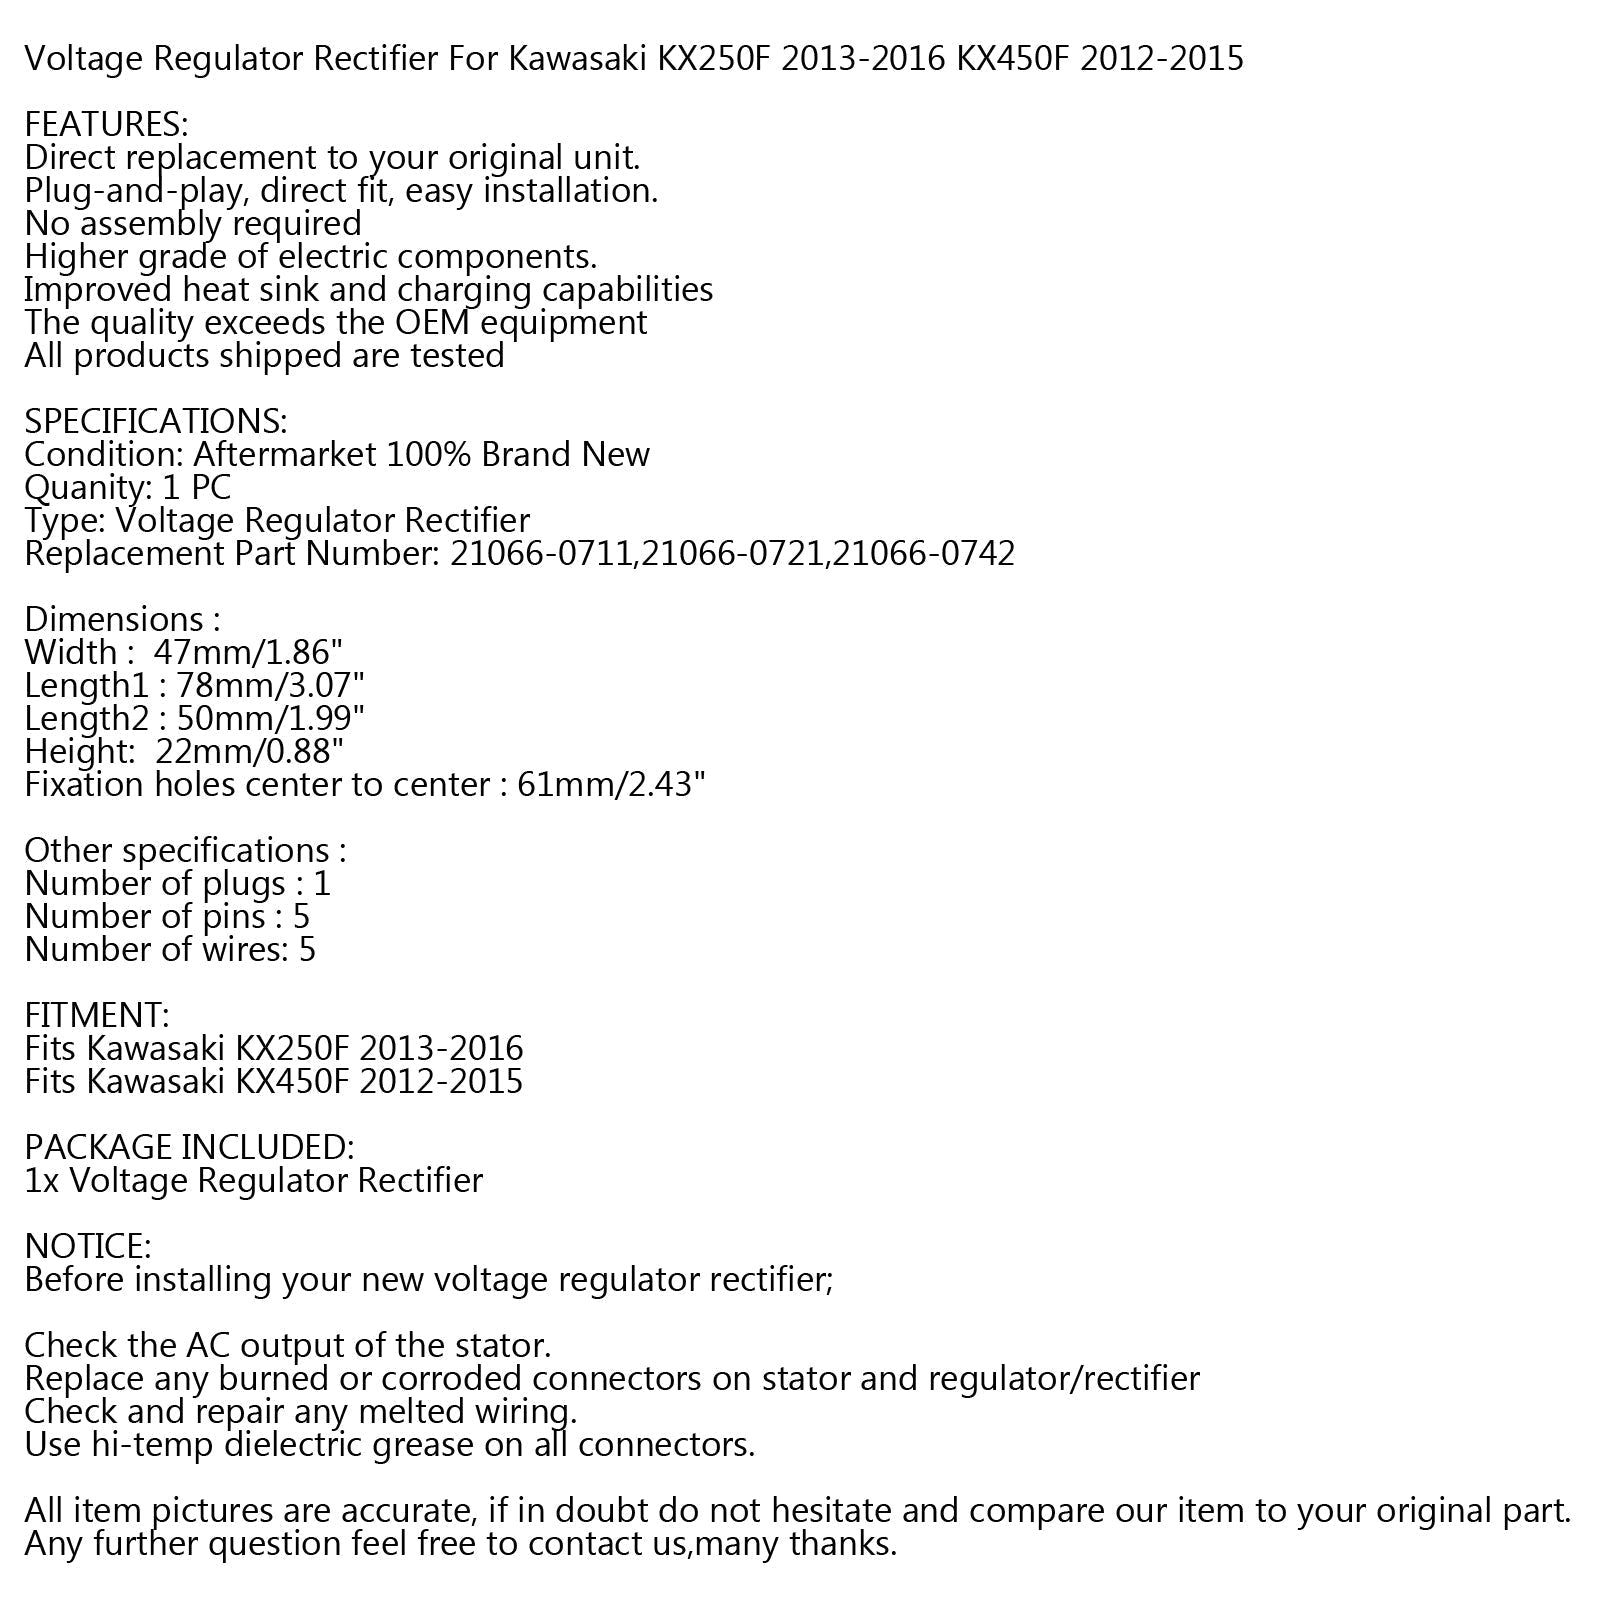 Rectificador regulador de voltaje apto para Kawasaki KX250F 2013-2016 KX450F 2012-2015 genérico